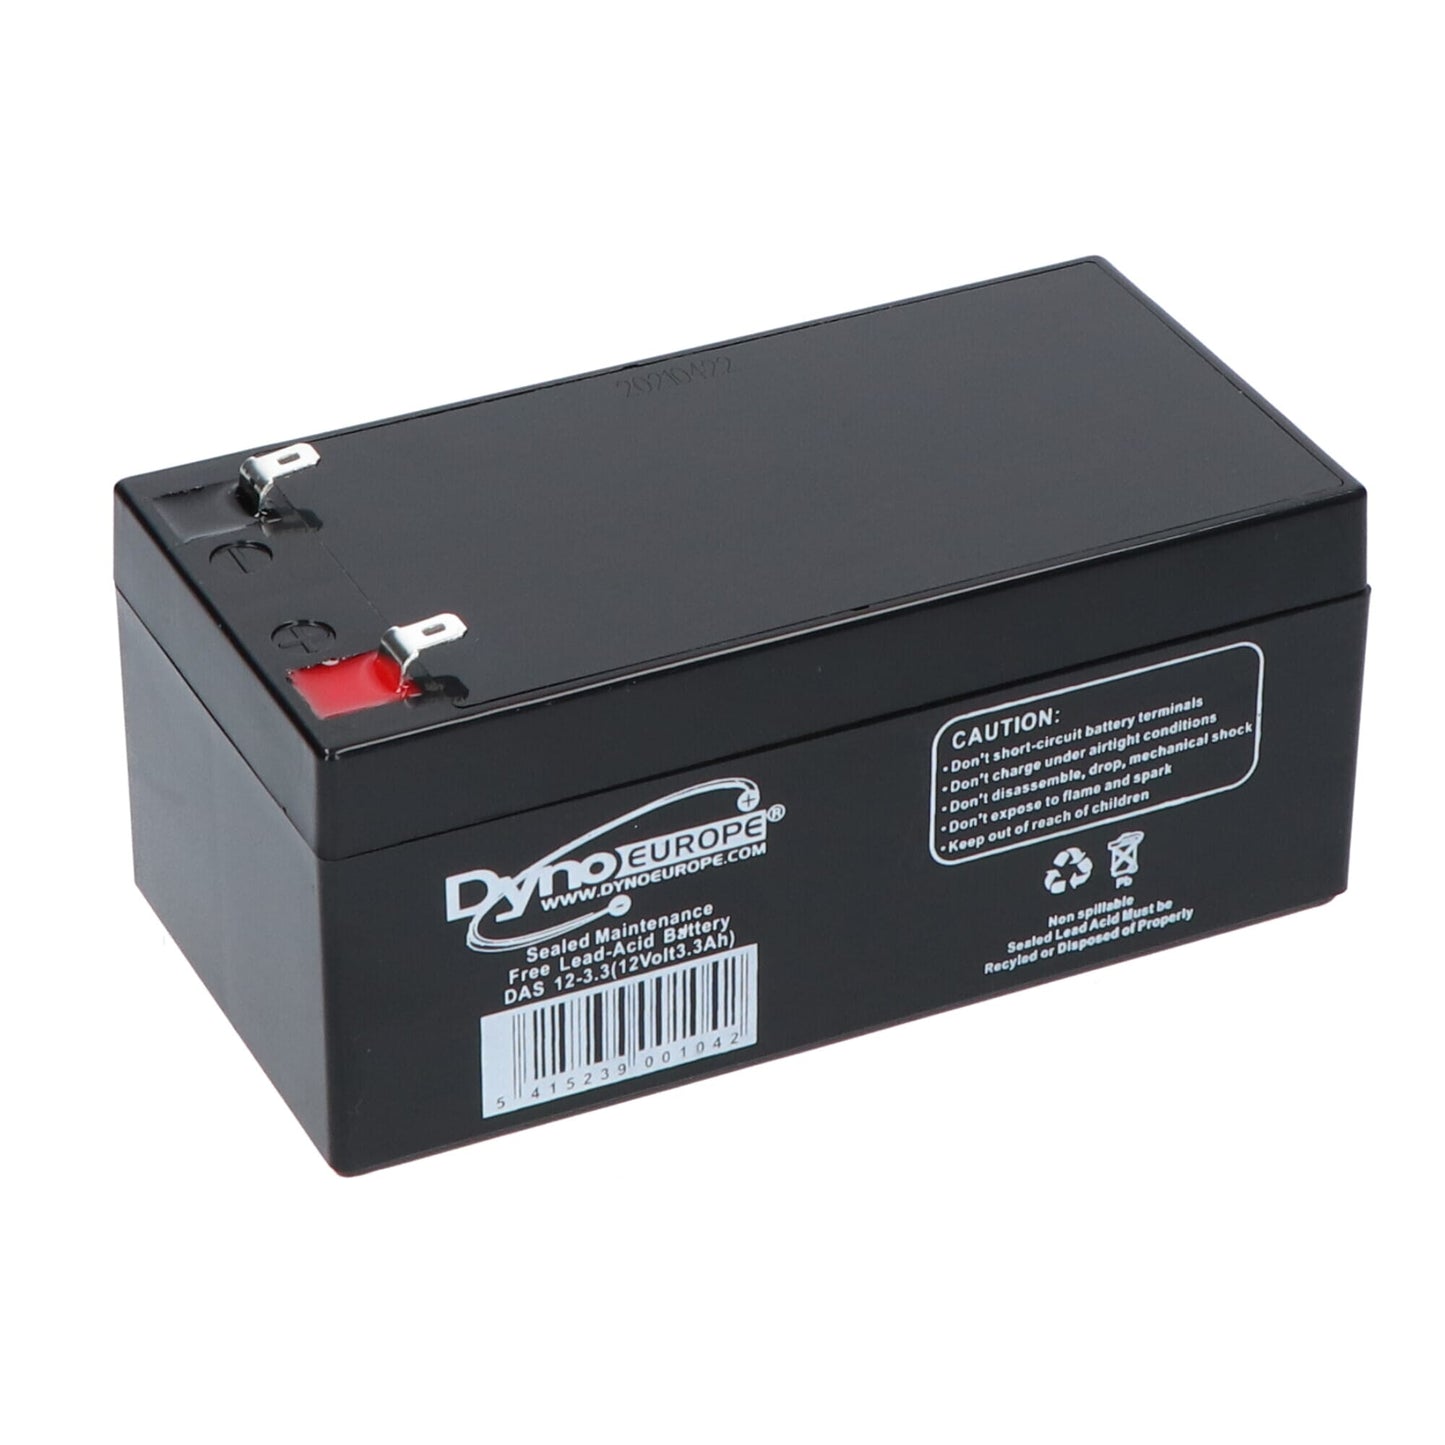 Dyno Europe Dyno Lead Battery 12V 3.3Ah